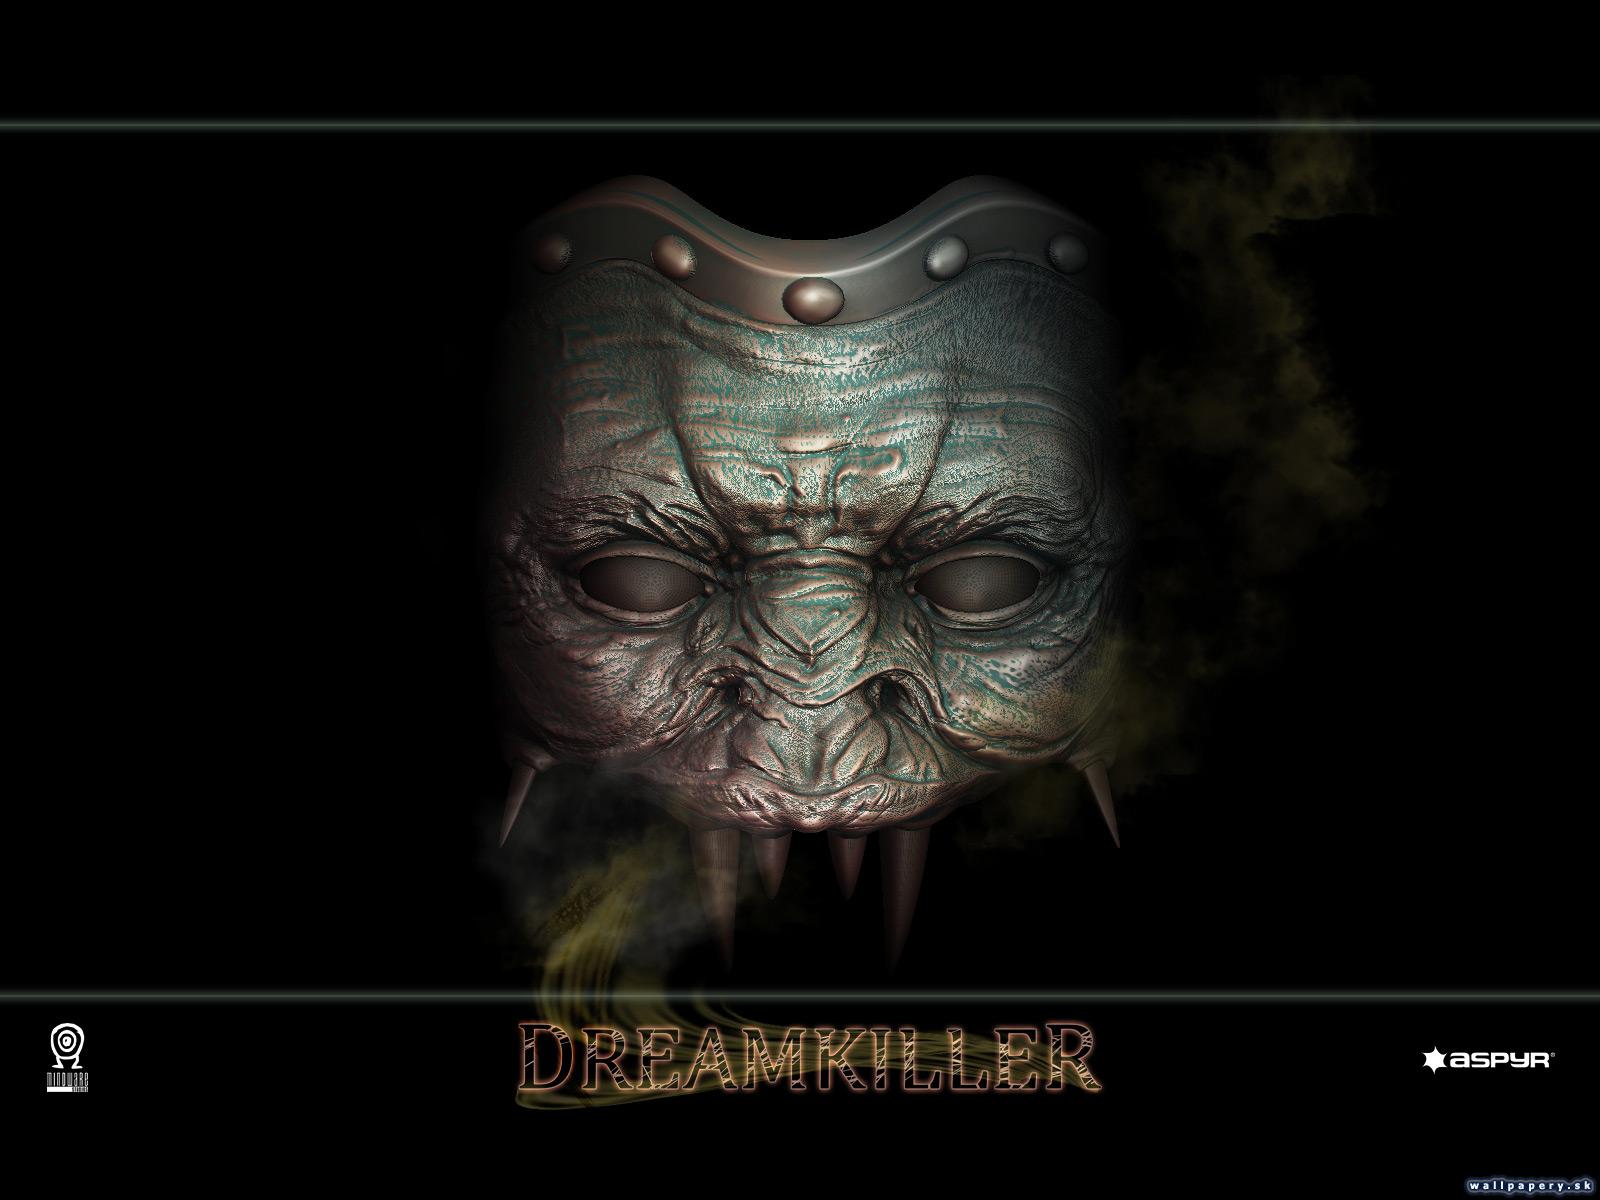 Dreamkiller - wallpaper 4